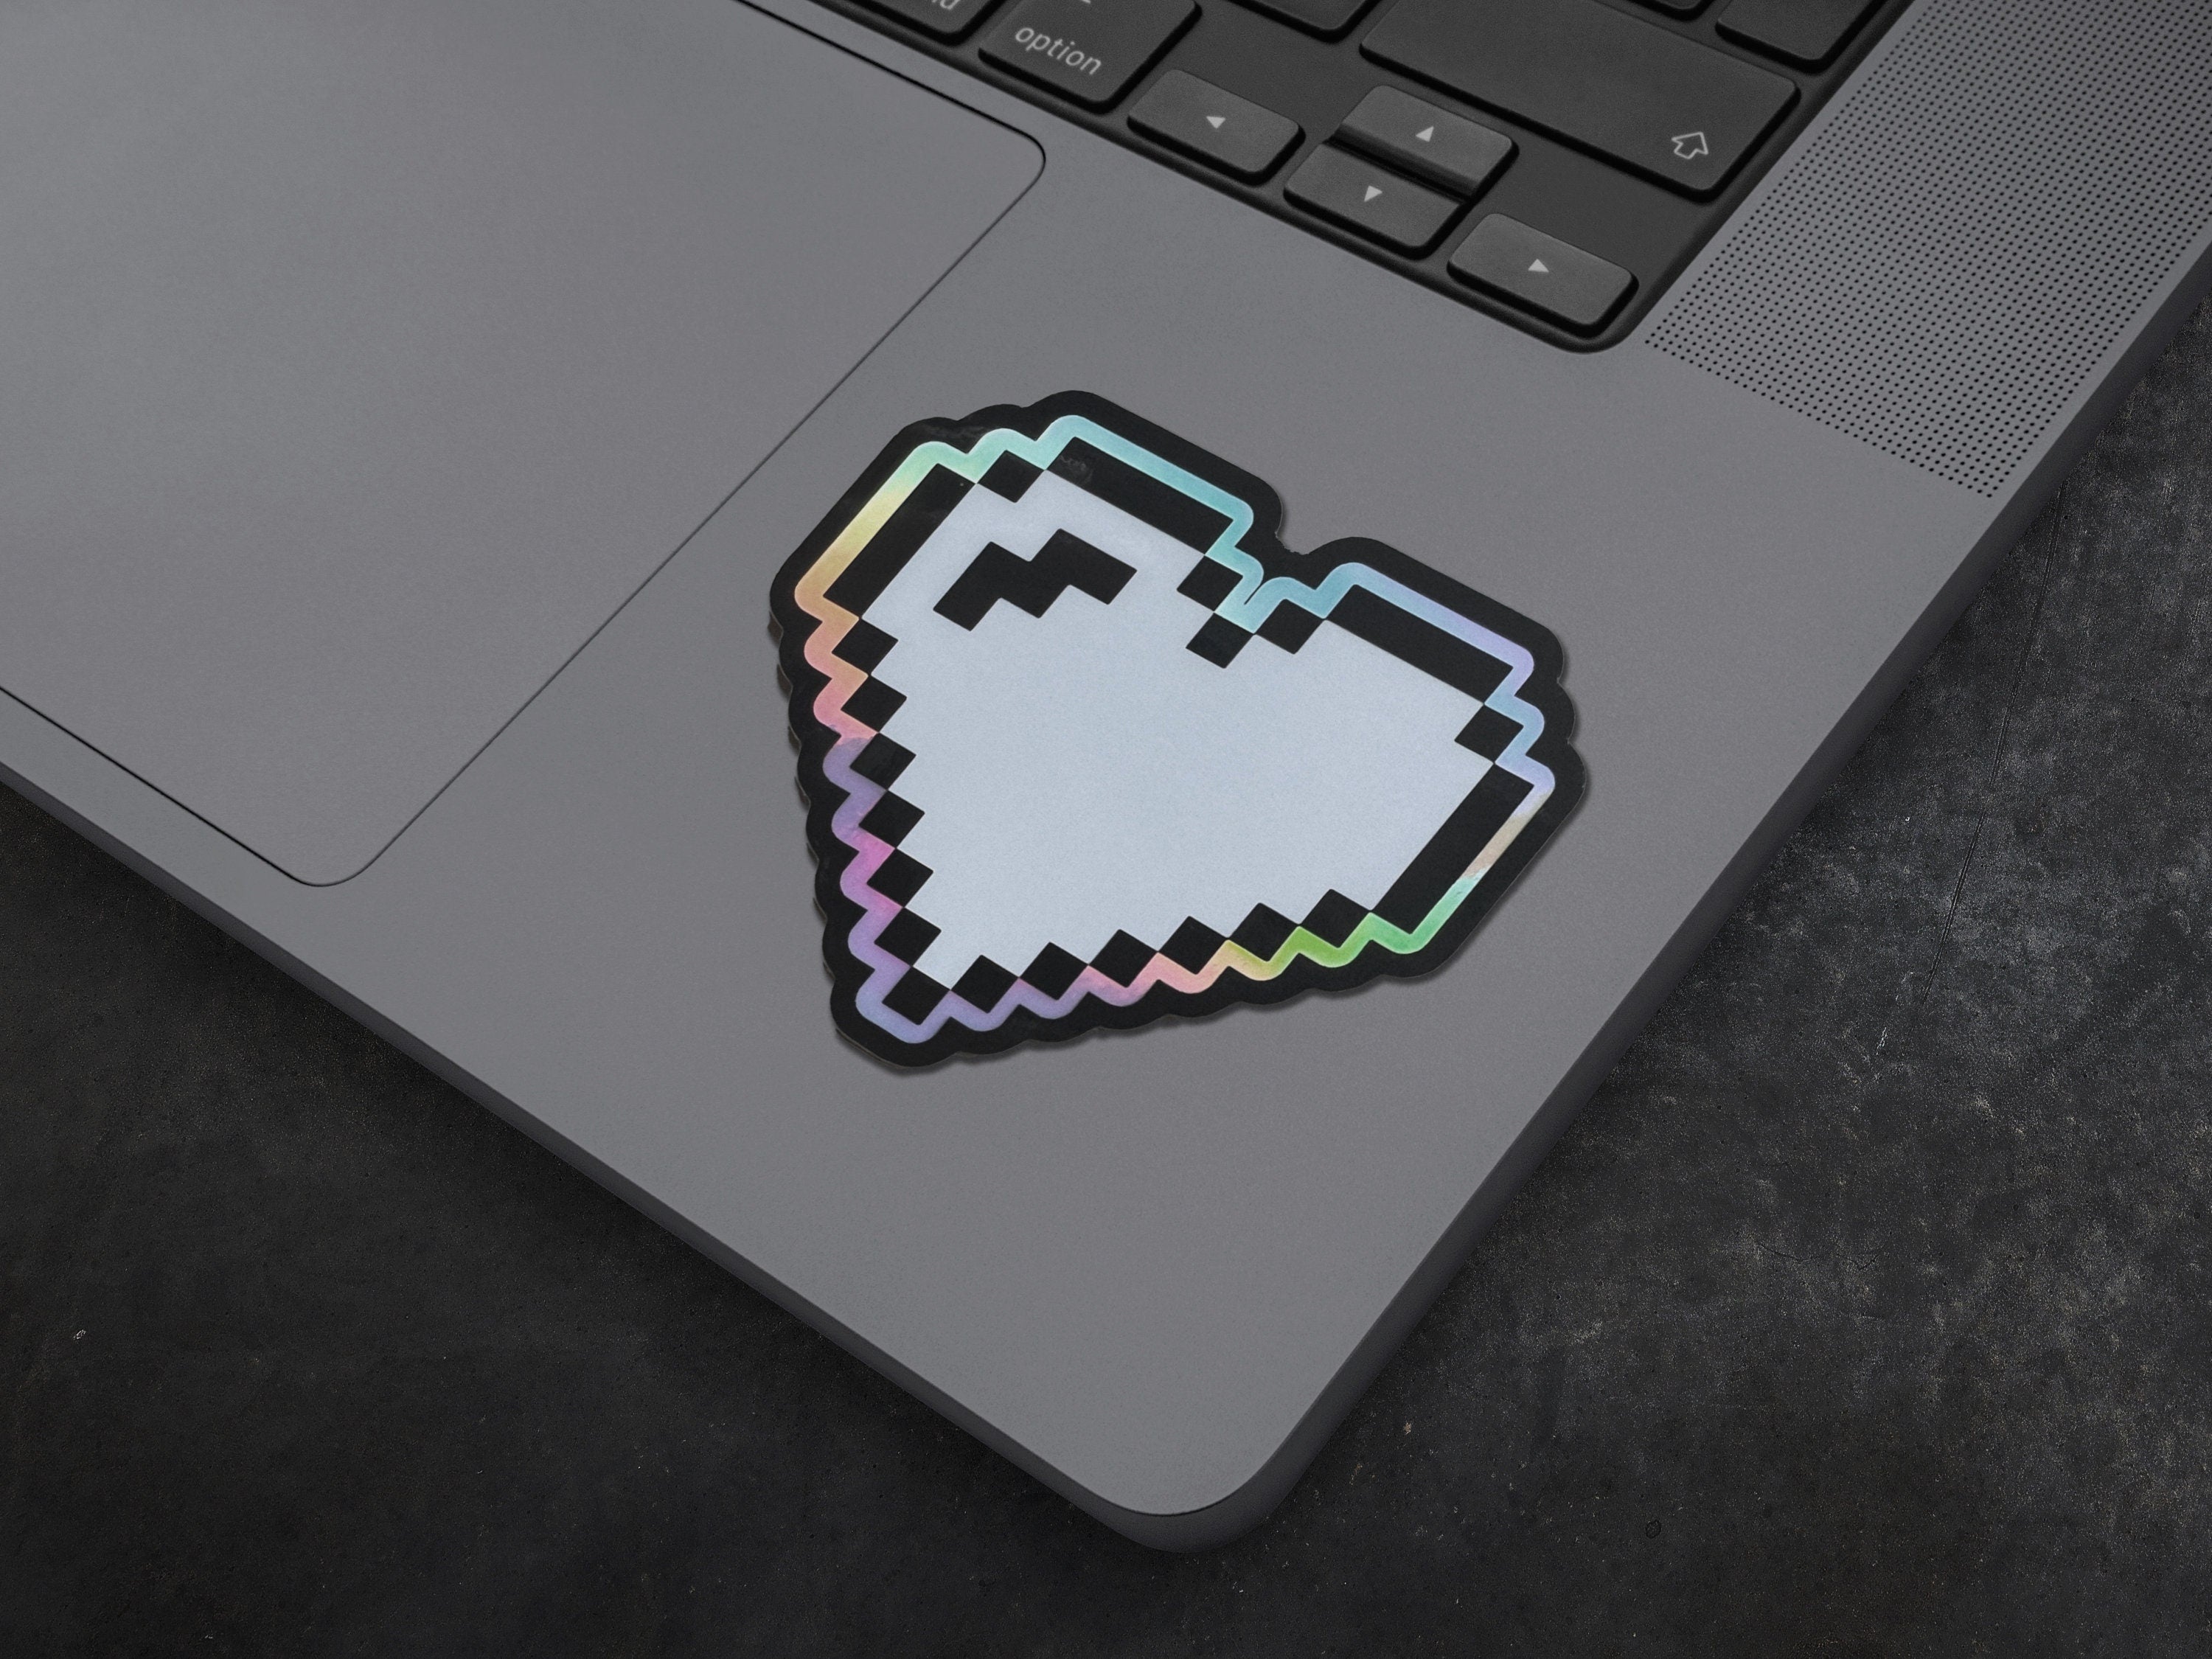 Pixel Hearts Cyberpunk Decal - Futuristic / Minimalist Holographic Sticker - Retro Vaporwave / Glitch Laptop Sticker by The Sciencey